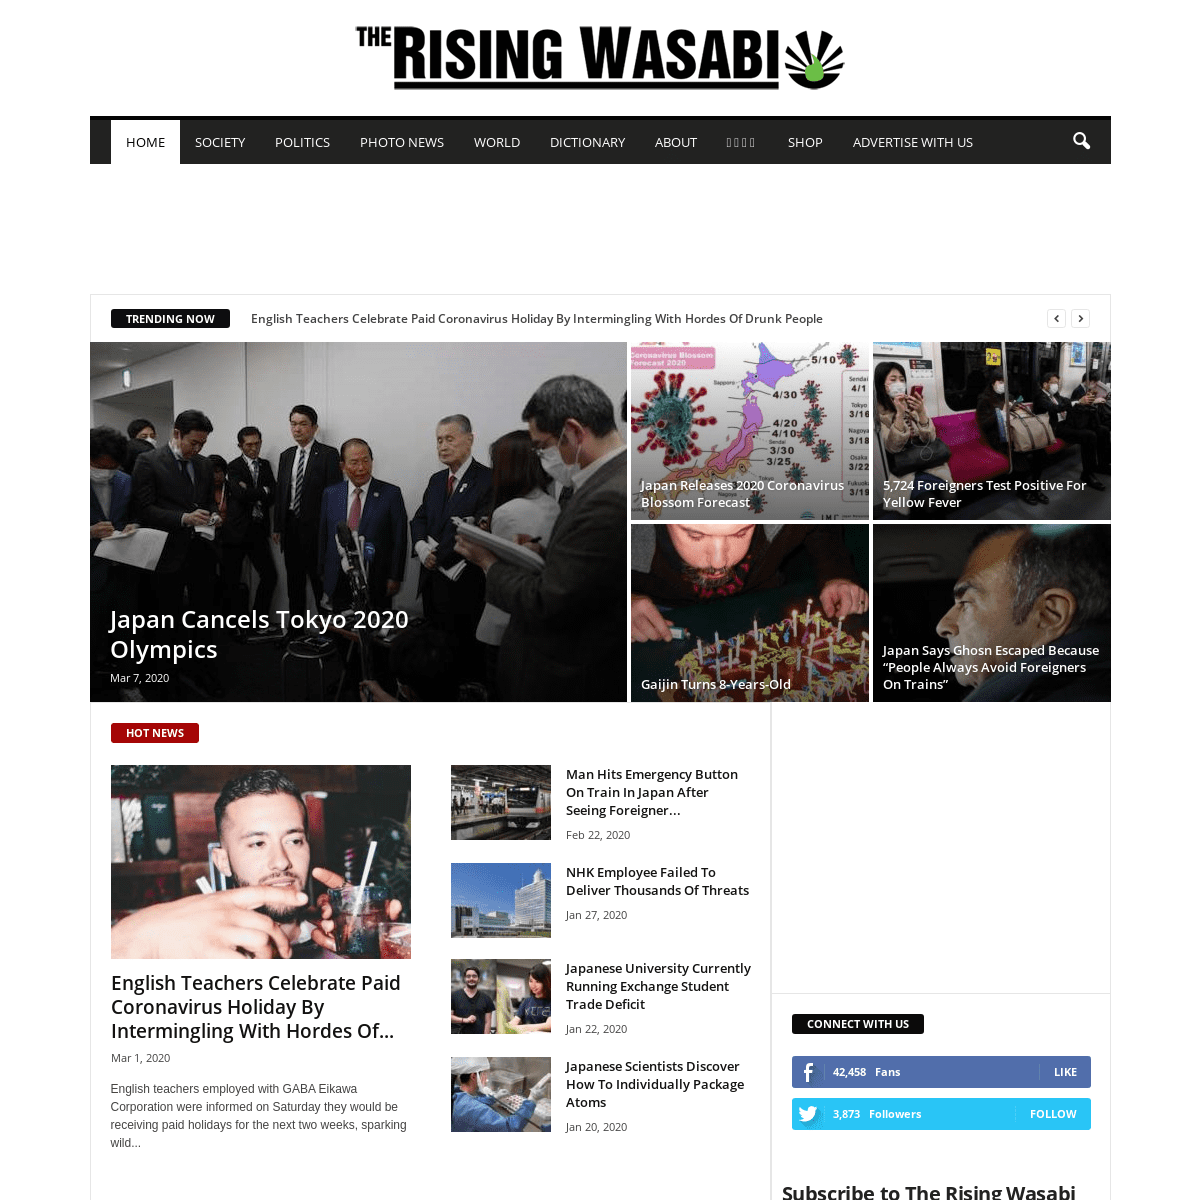 A complete backup of therisingwasabi.com